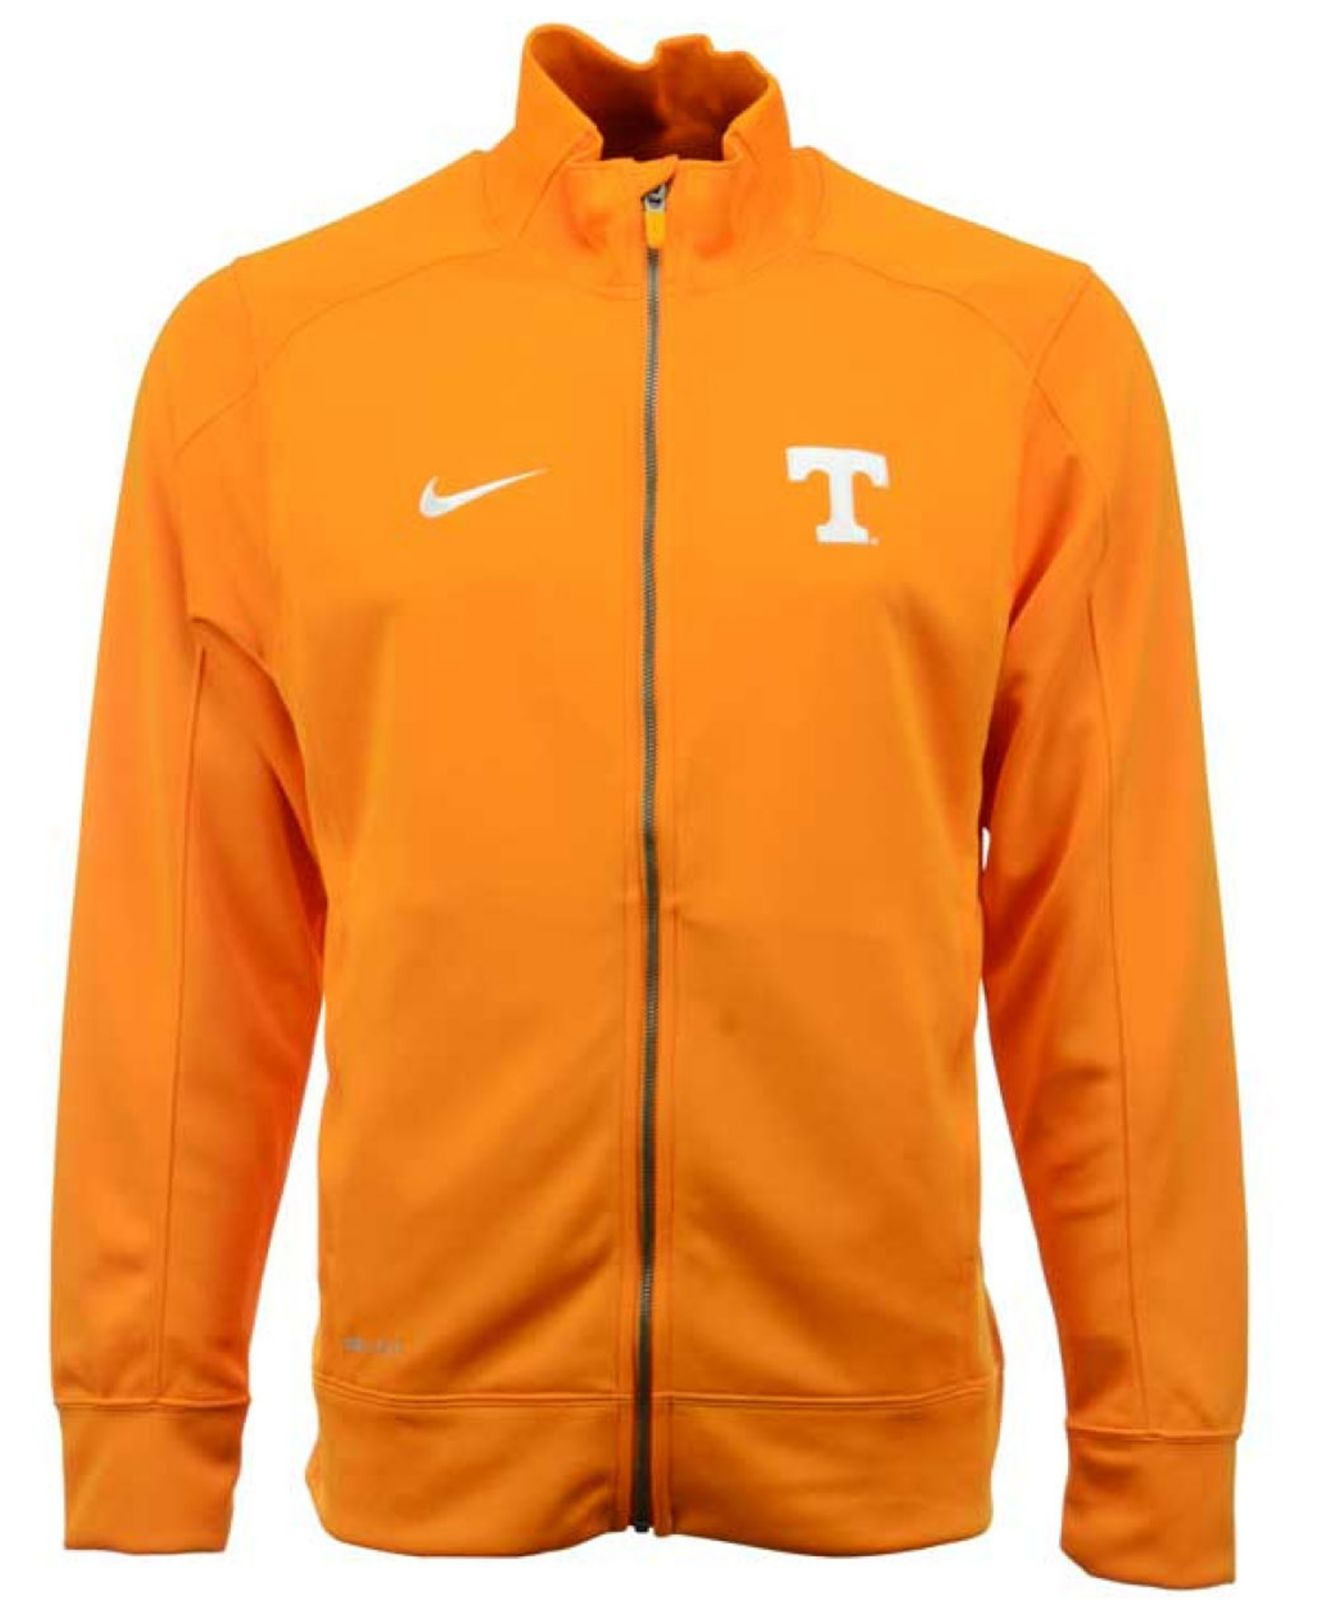 Lyst - Nike Men's Tennessee Volunteers Stadium Classic Track Jacket in ...